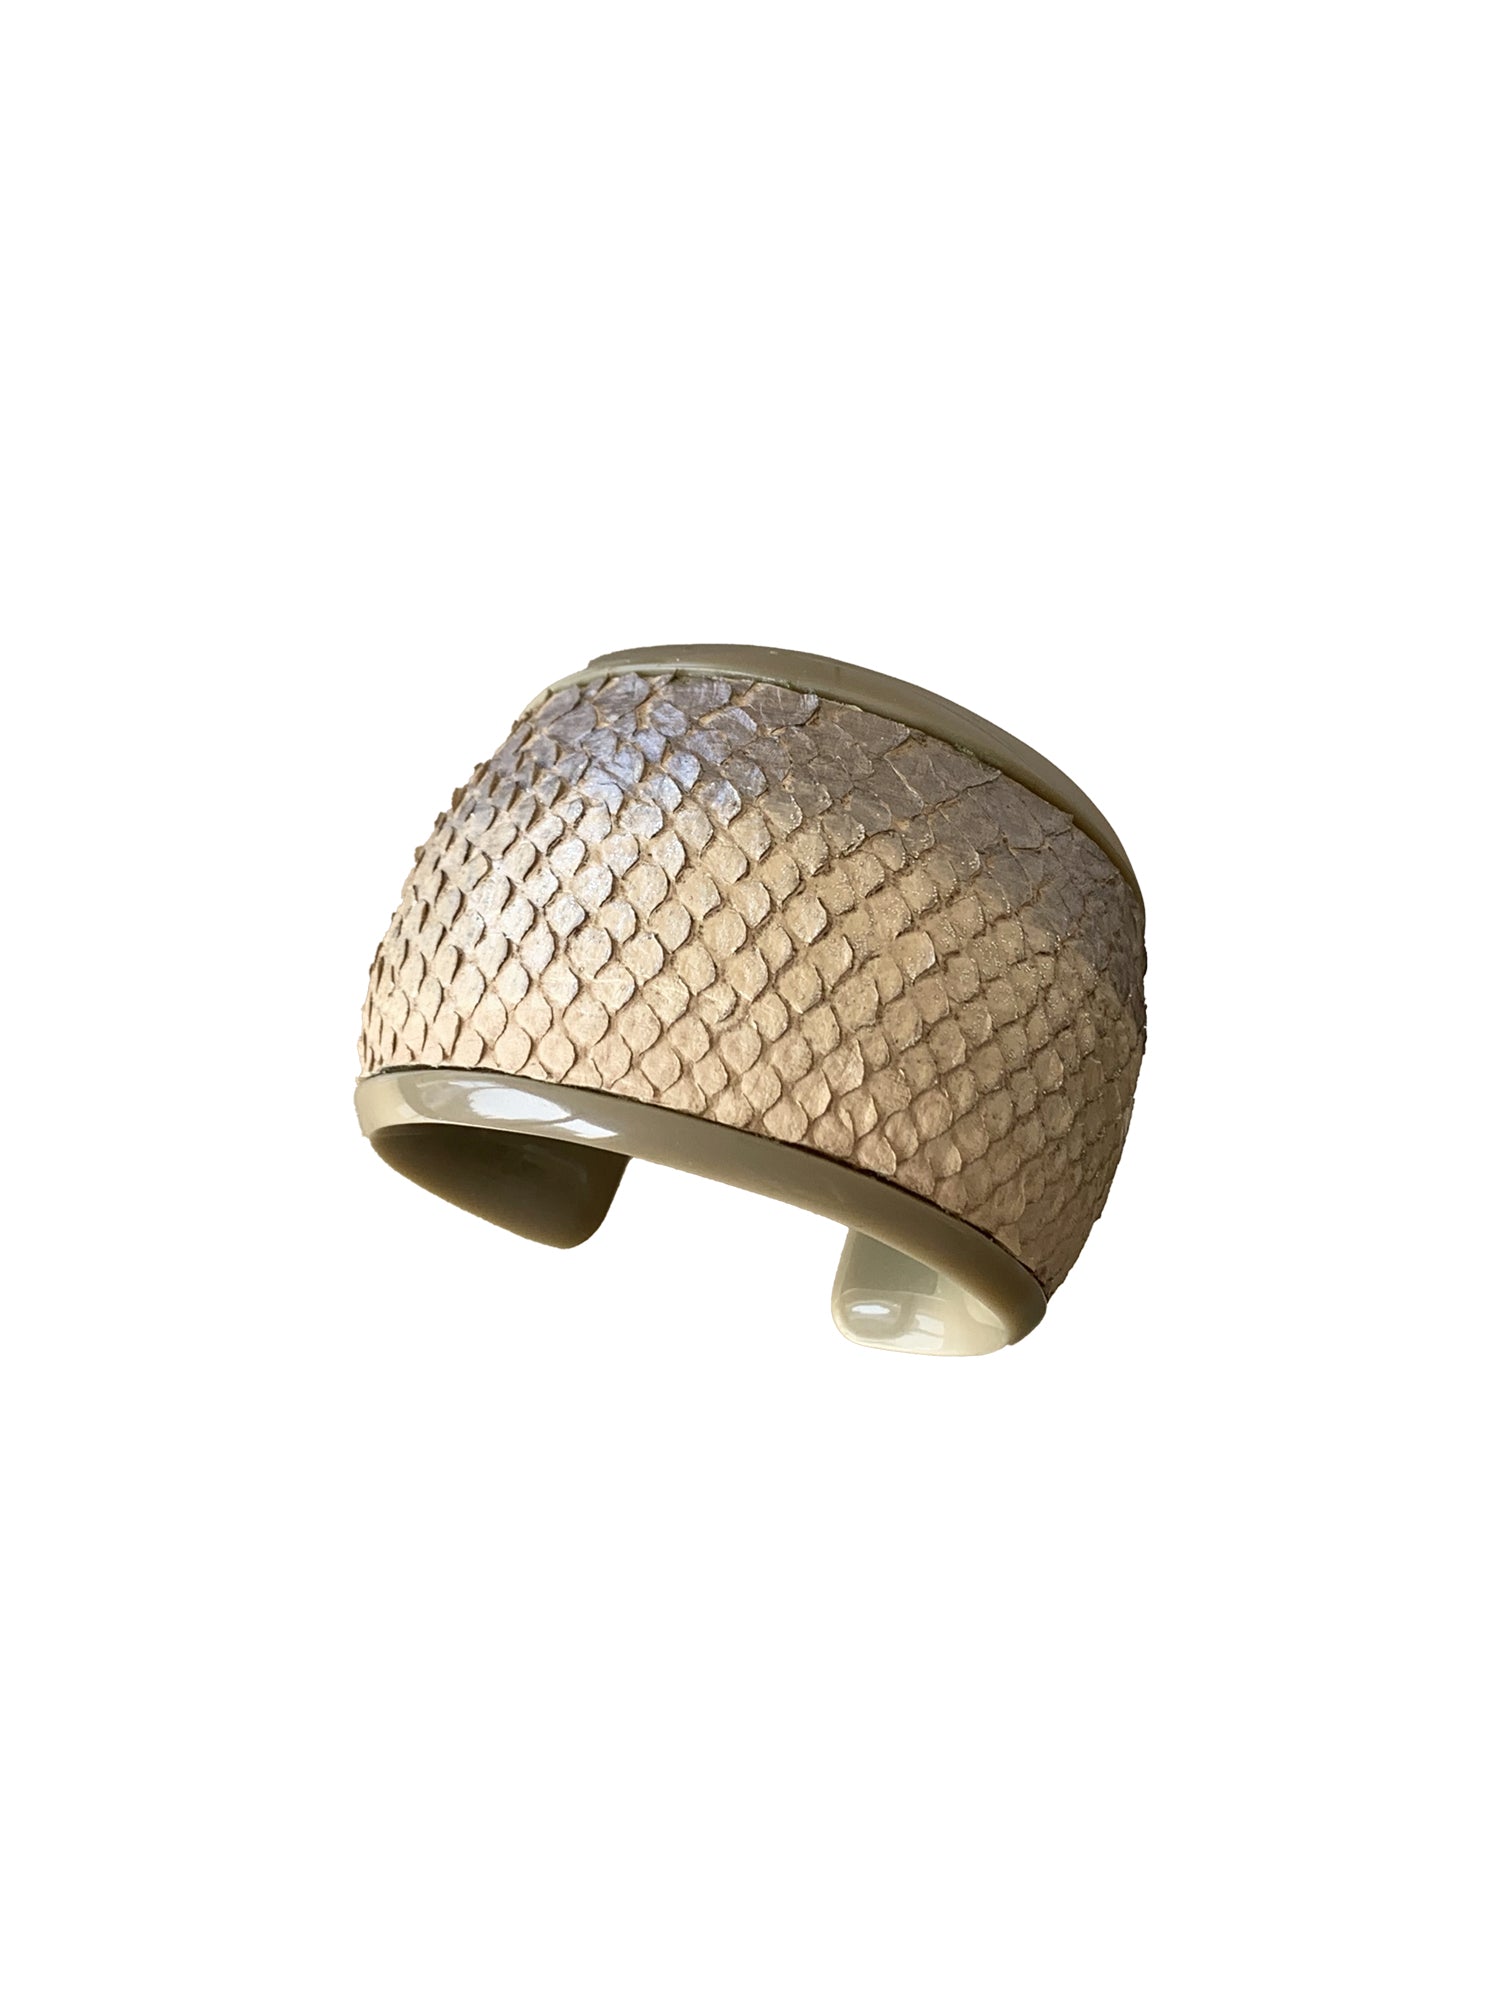 Resin Cuff Bracelet - Khaki / Gold